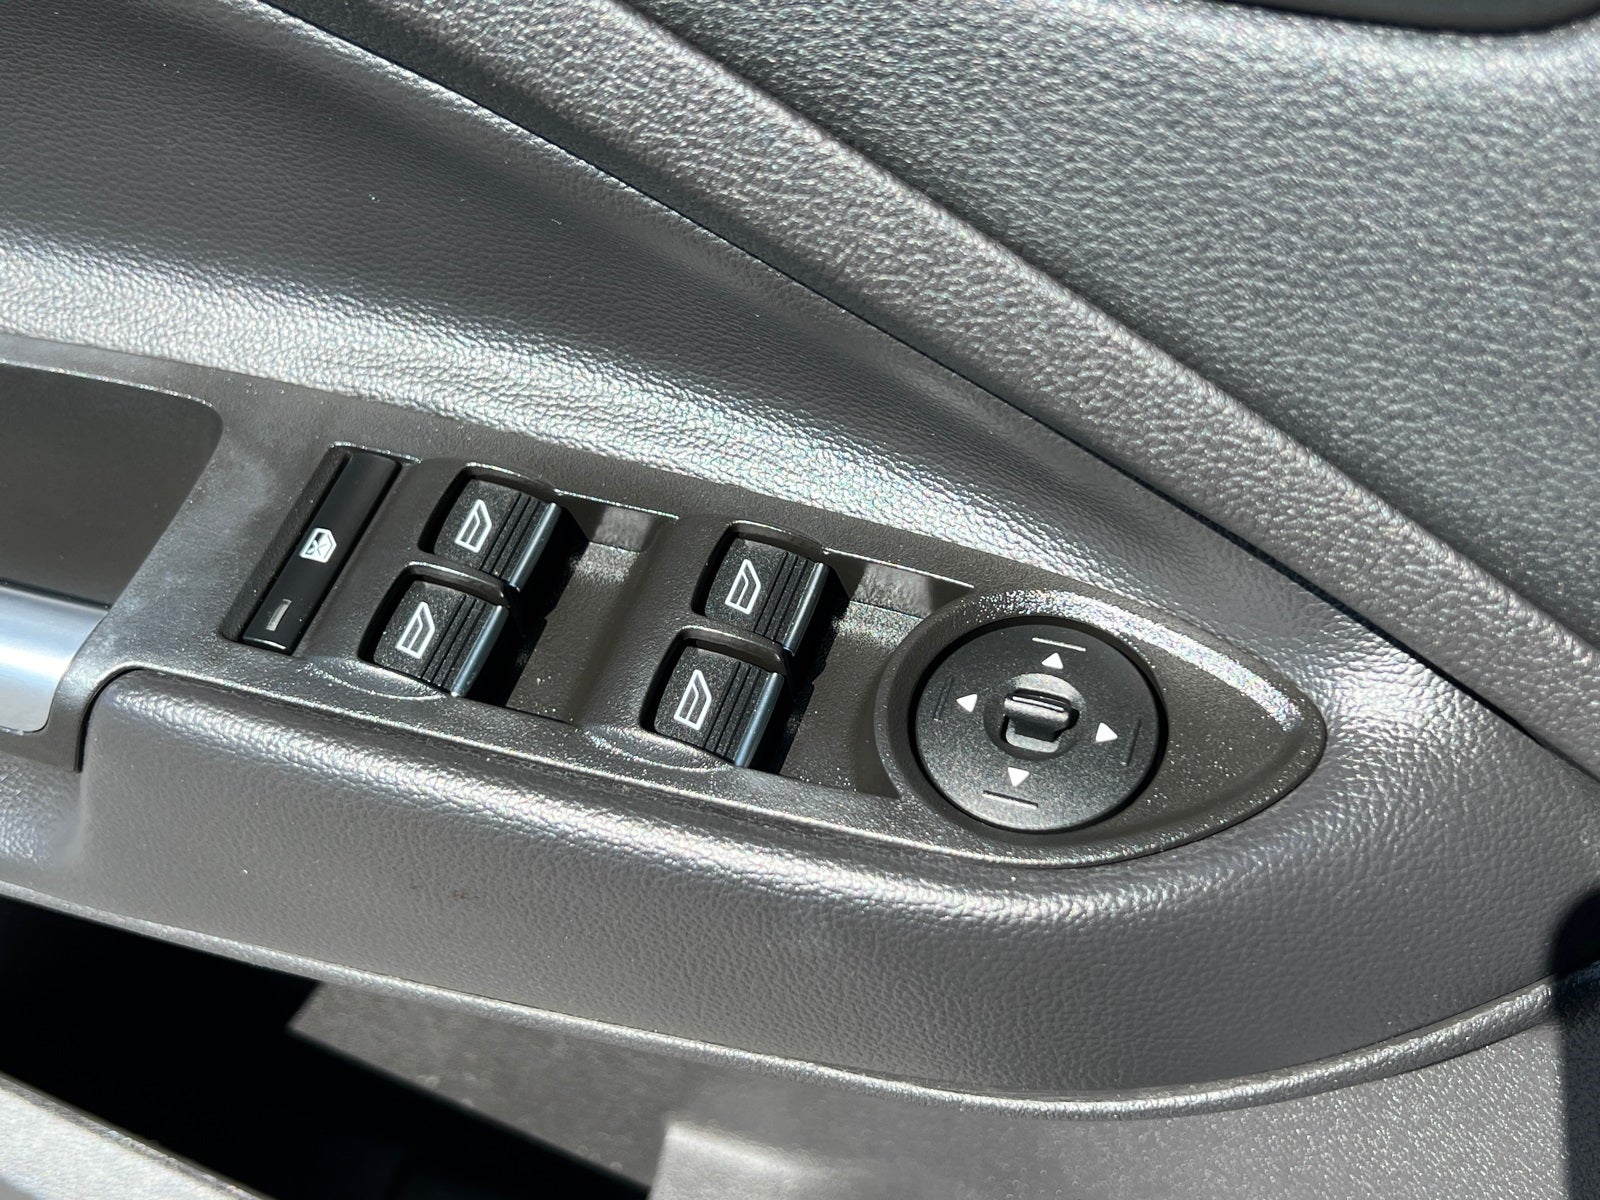 2016 Ford C-Max Hybrid SE